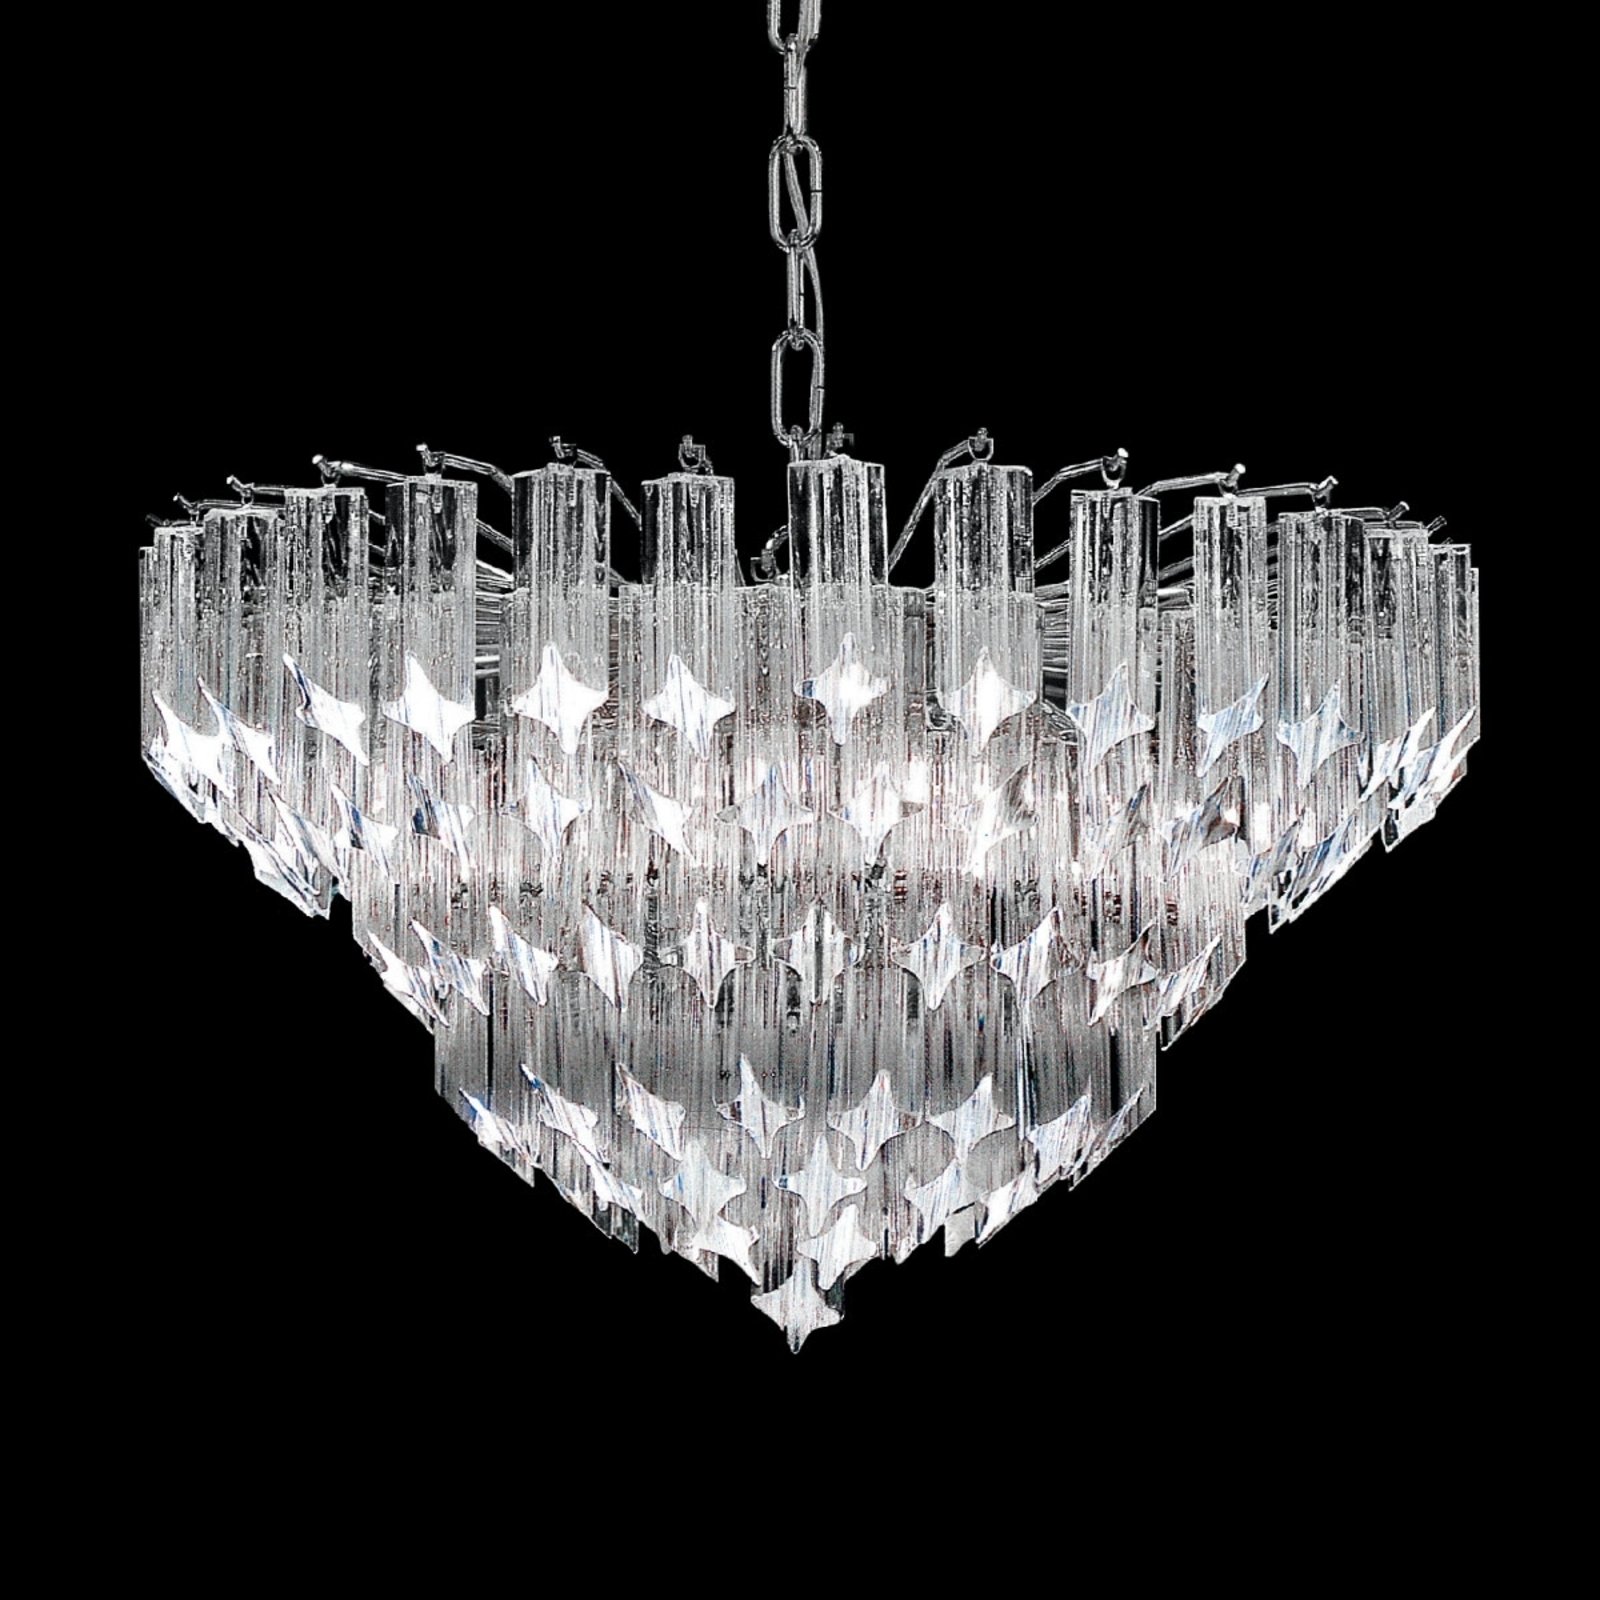 Centoventuno - crystal hanging light